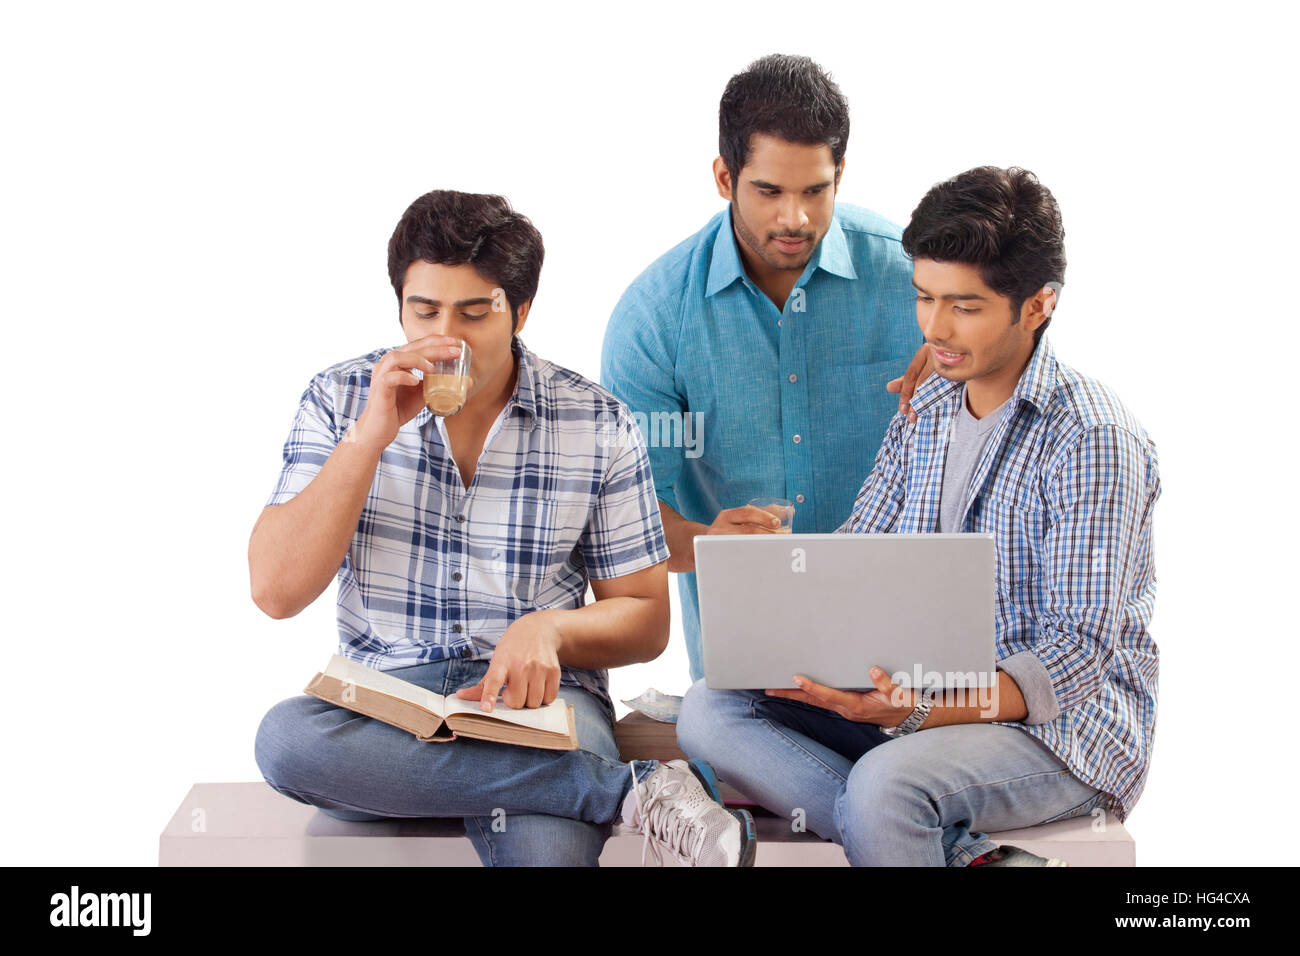 Three friends studying using laptop Stock Photo